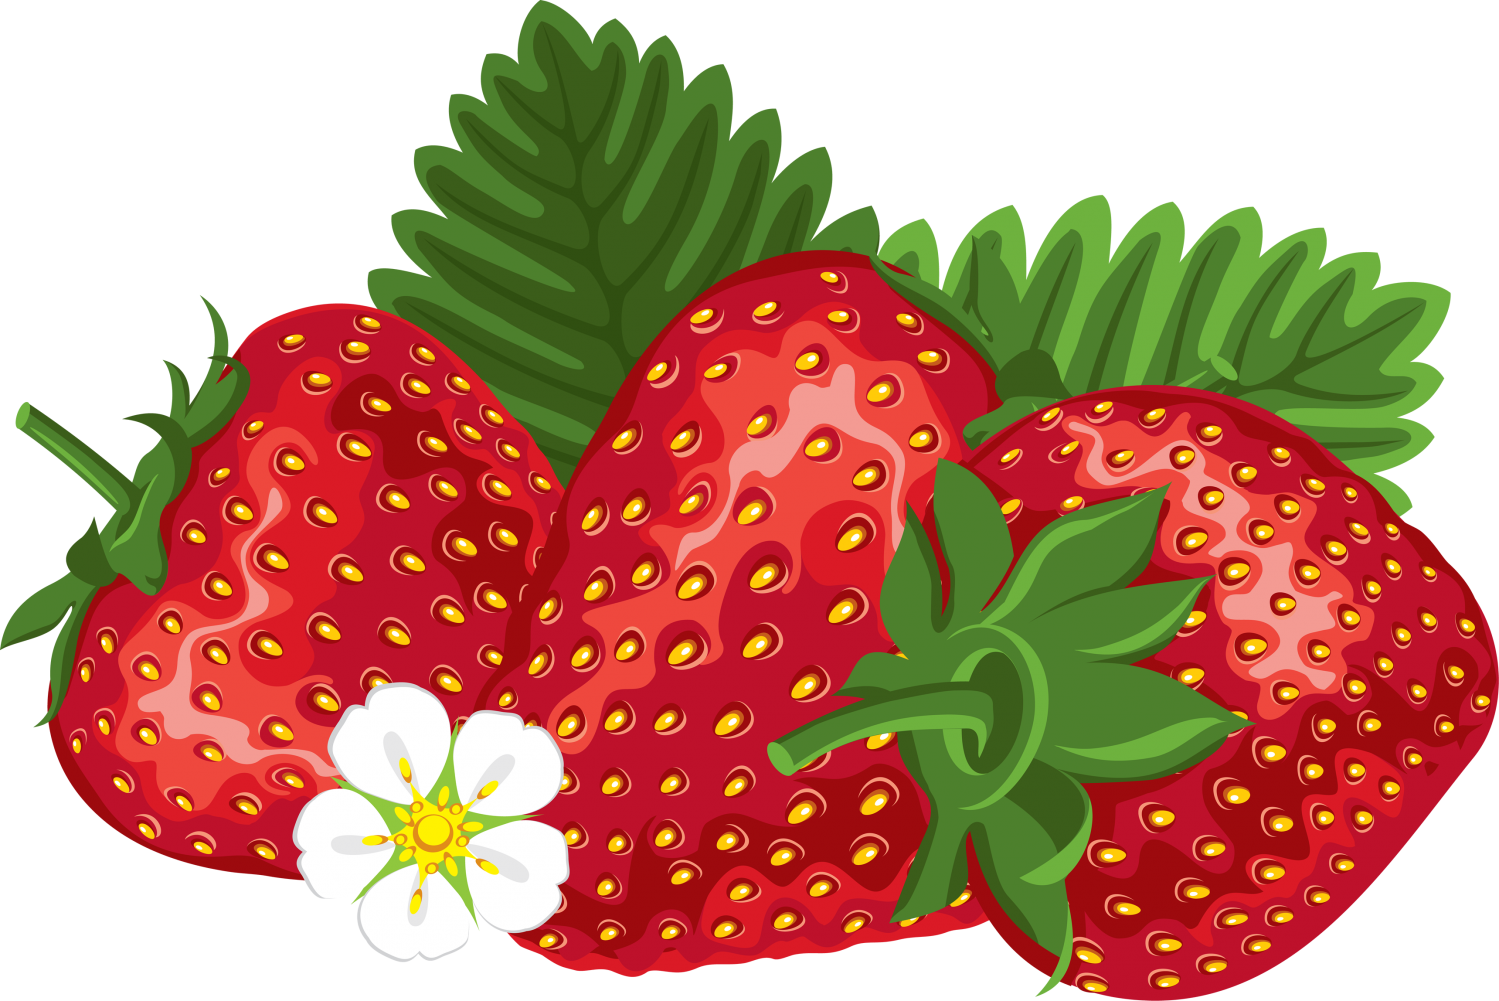 Strawberries Vector PNG HD